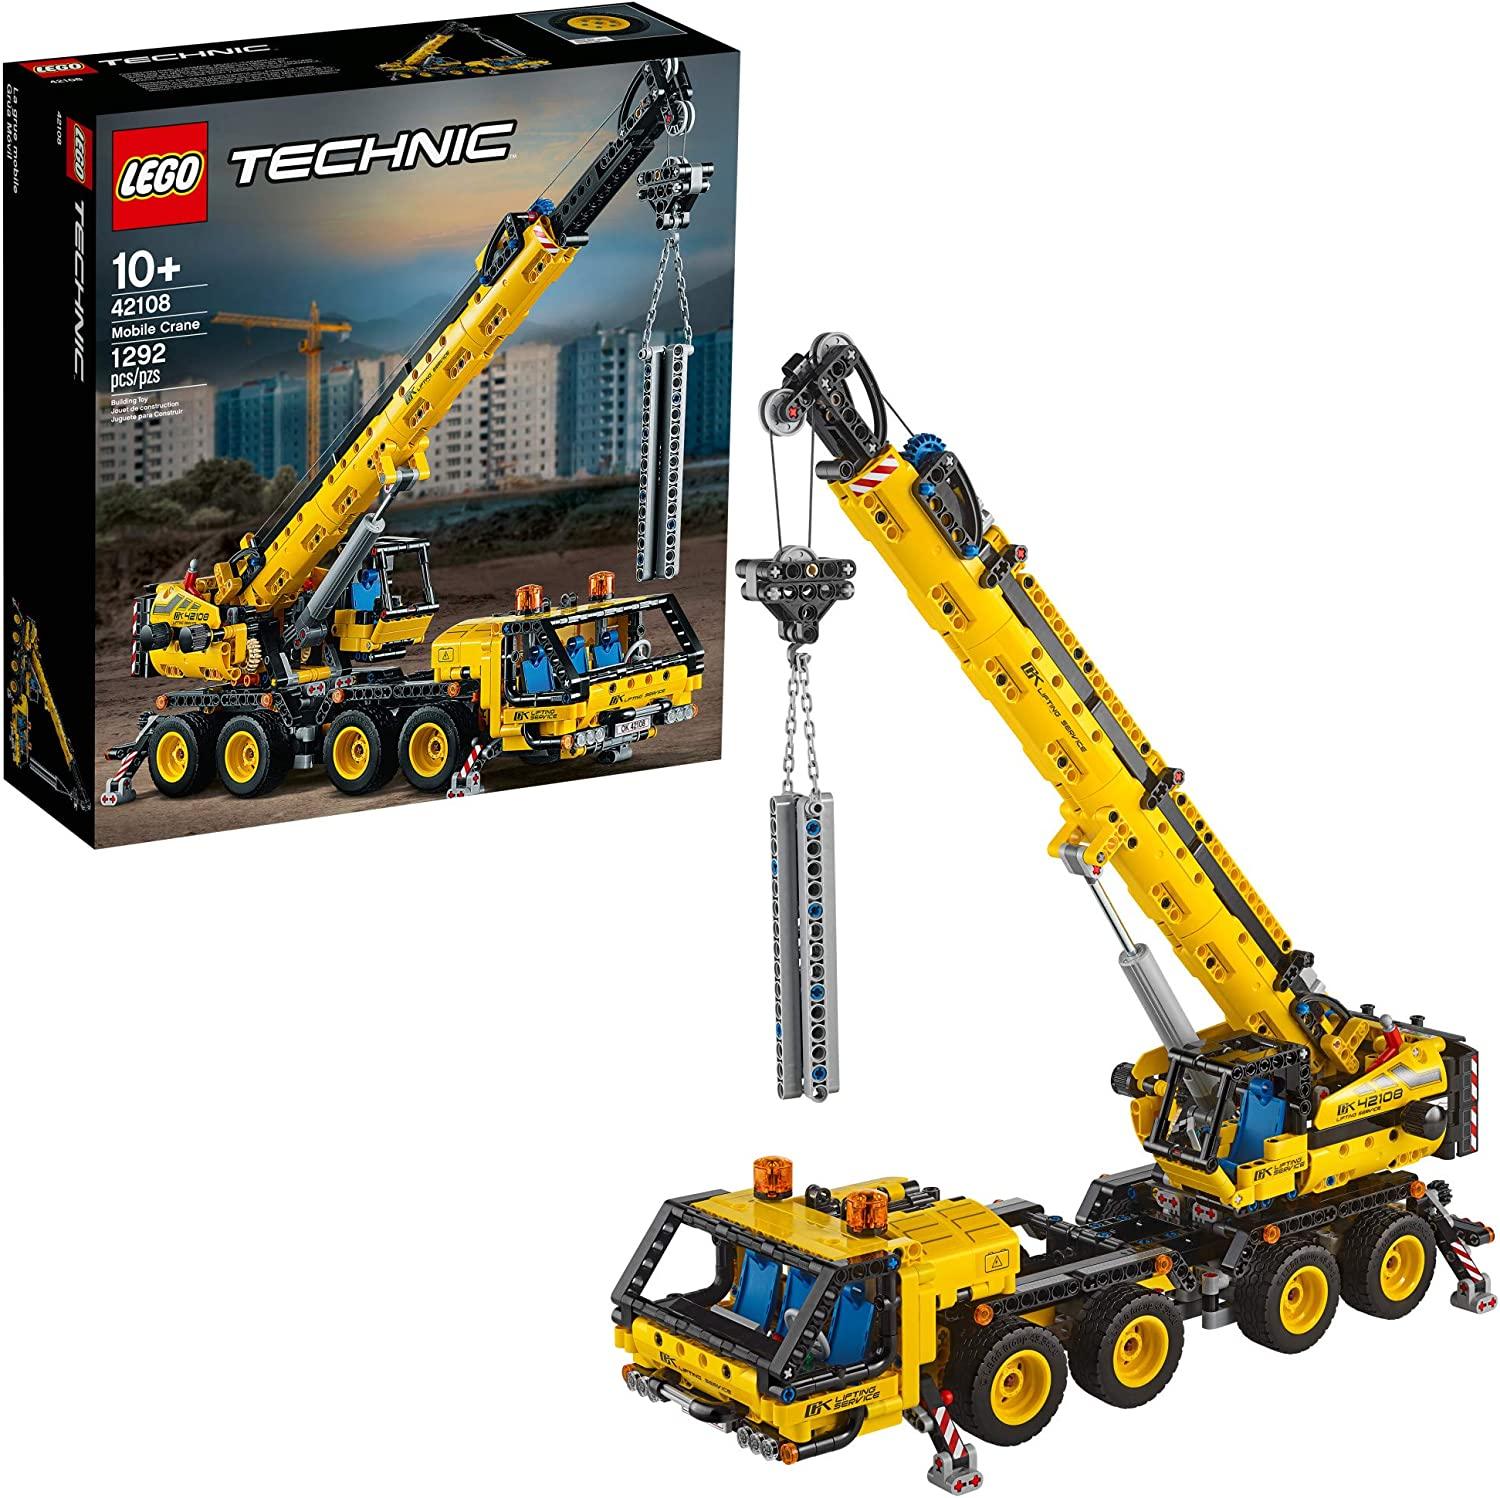 1292-Piece LEGO Technic Mobile Crane Building Set for $79.99 Shipped